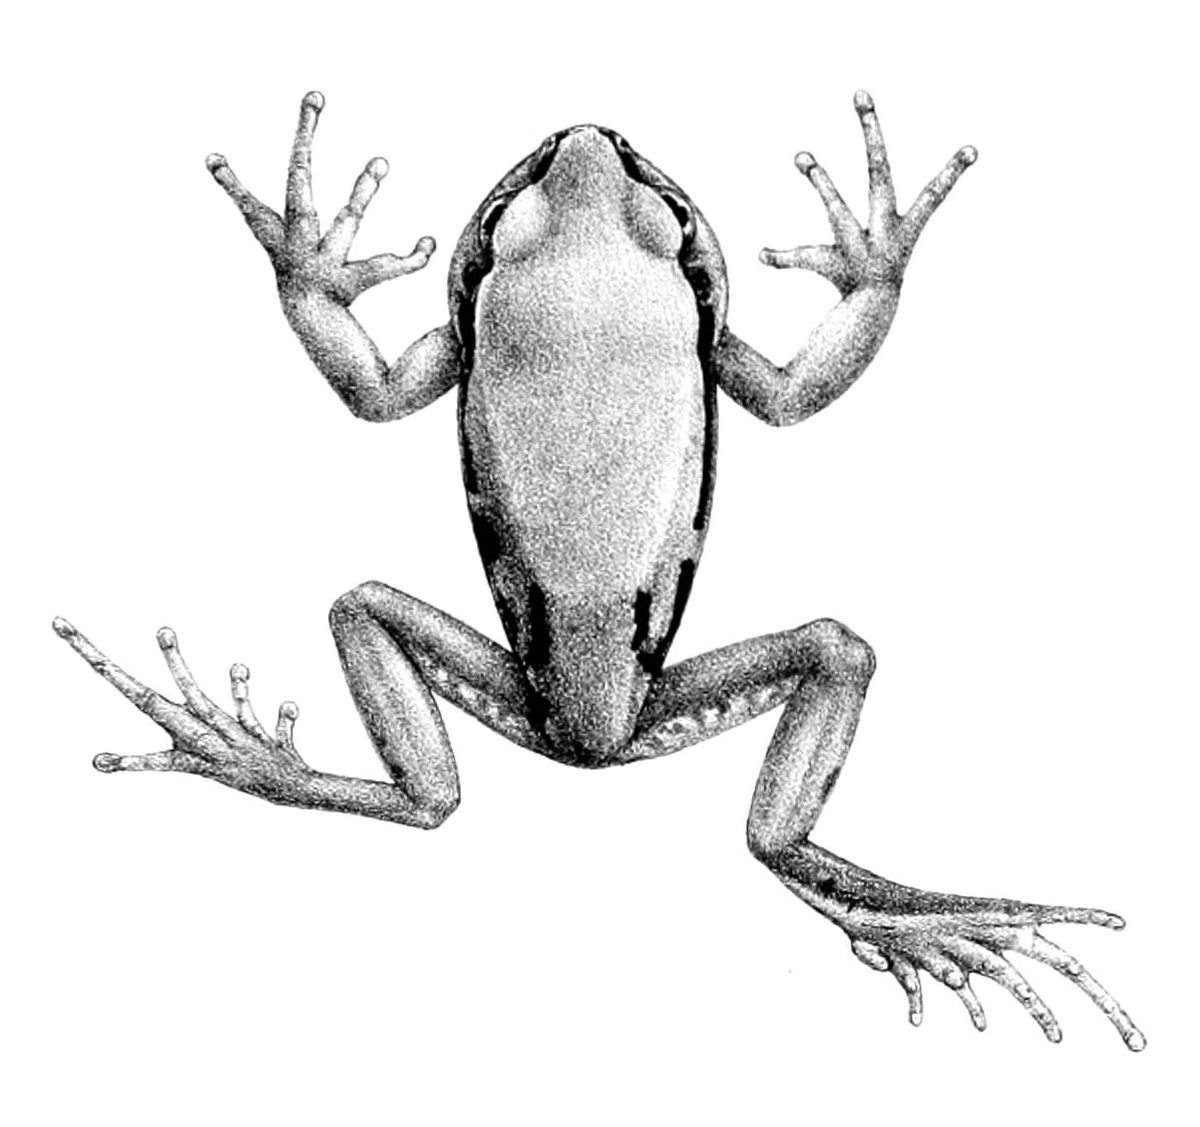 Перепонки между пальцами у земноводных. Пятипалые конечности у земноводных. Пятипалая конечность лягушки. Tanygnathus gramineus. Пальцы лягушки.